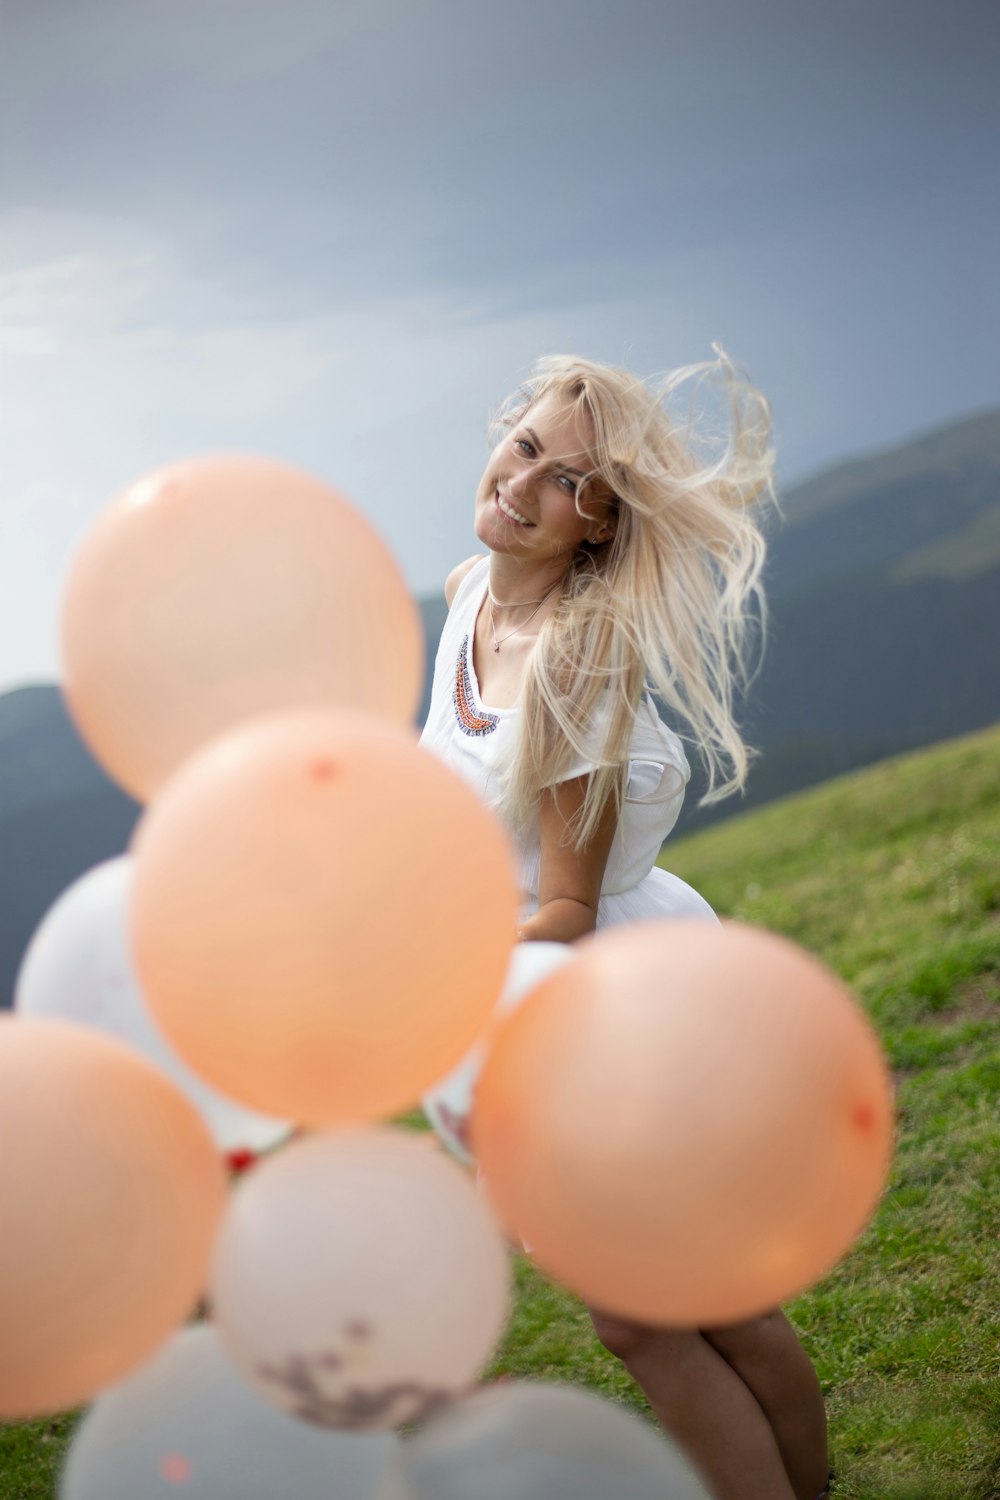 girl in white dress holding balloons on green grass field during daytime